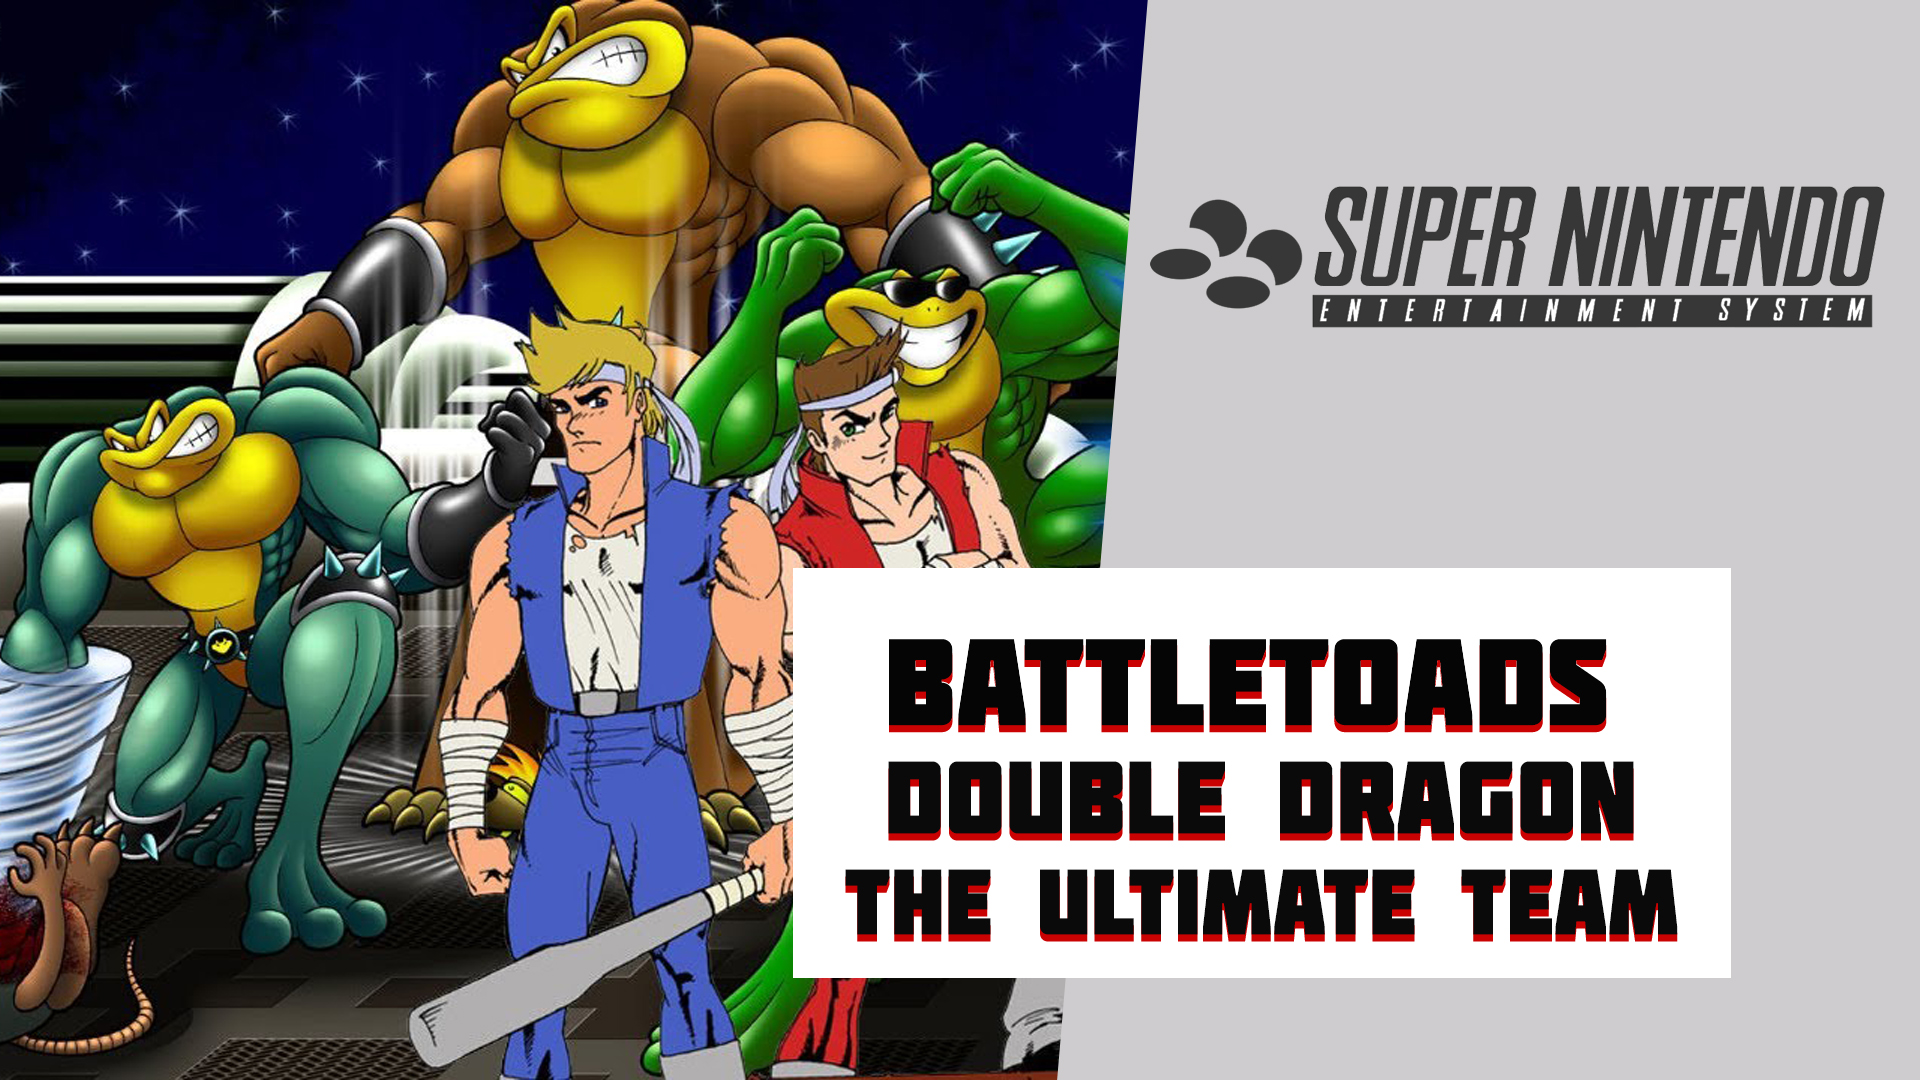 Battletoads ultimate team. Battletoads & Double Dragon - the Ultimate Team. Battletoads Double Dragon 2022.